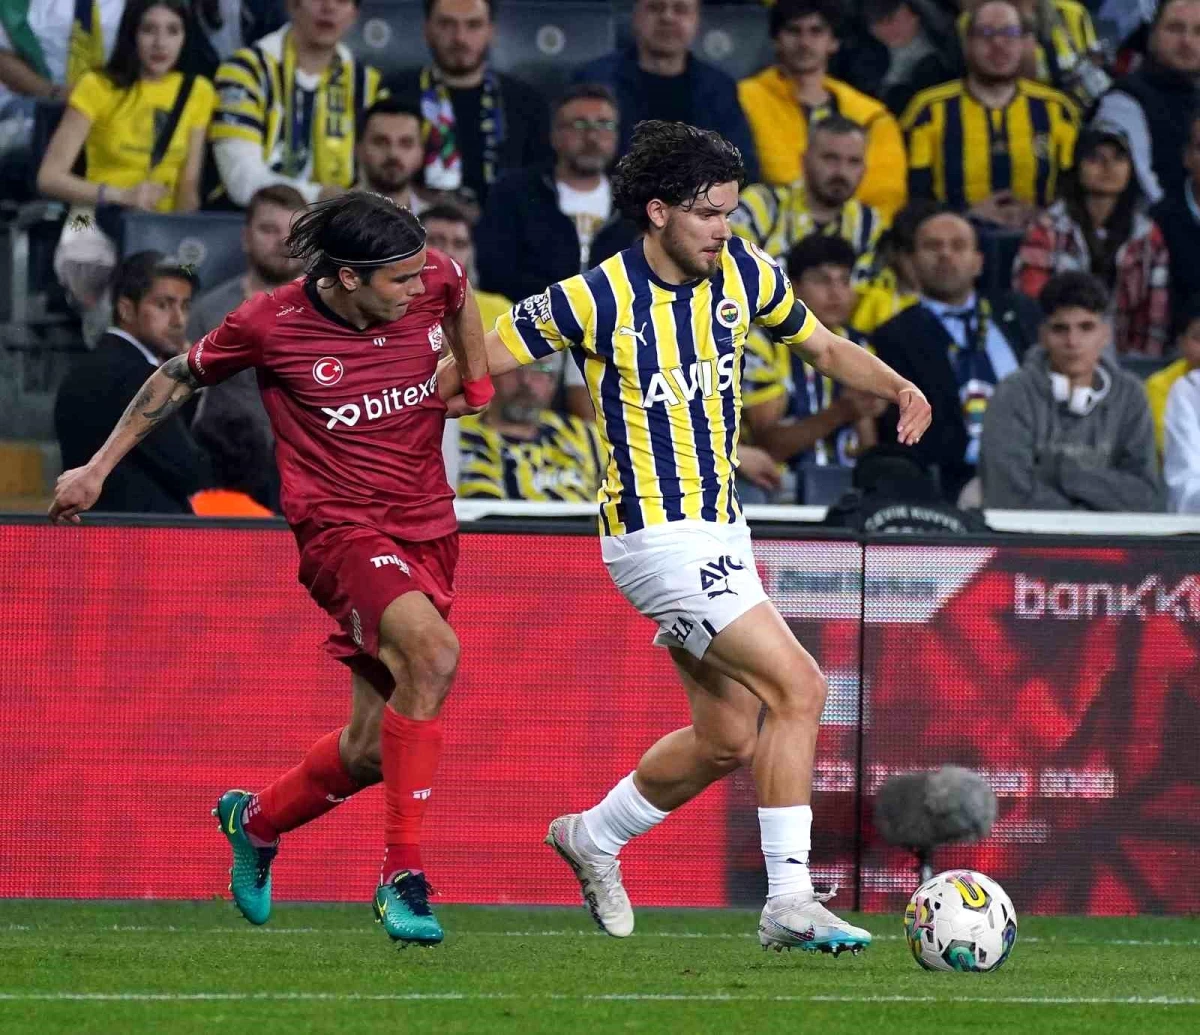 Fenerbahçe, Sivasspor ile 35. kez karşılaşacak